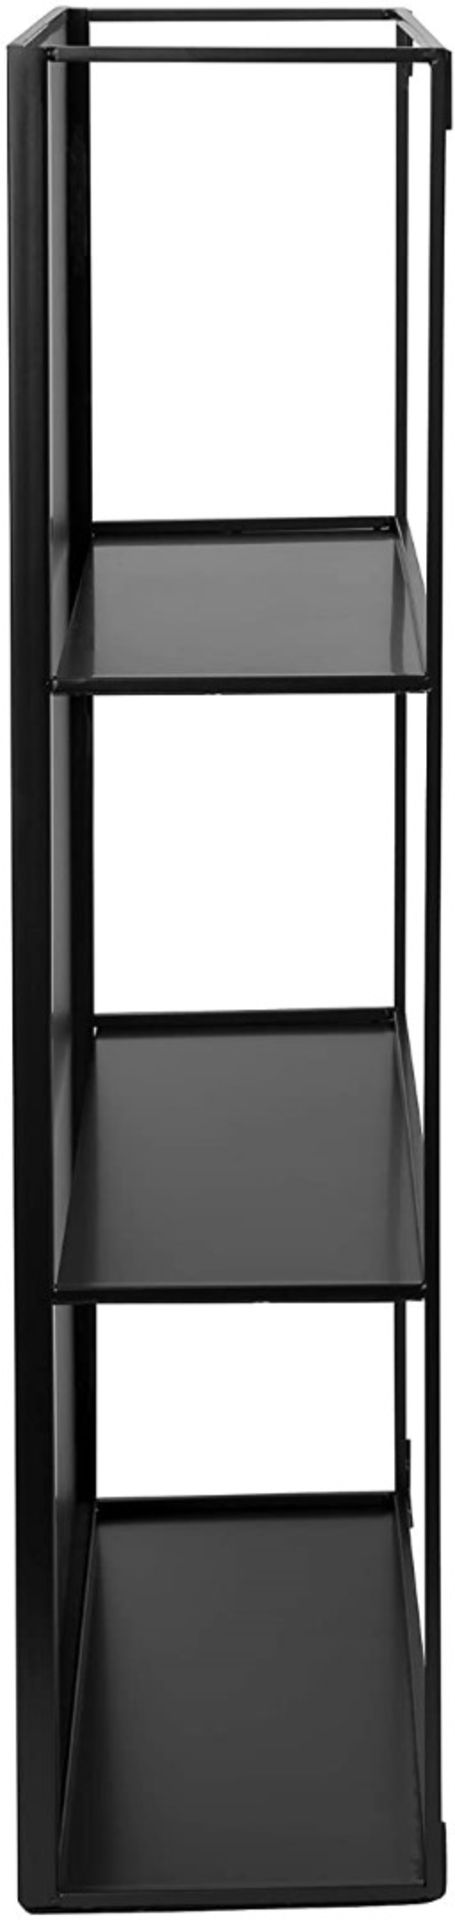 1 x Umbra 'CUBIKO' Sleek Modern Mirrored Medicine Cabinet With A Black Metal Frame - Dimensions: - Image 5 of 8